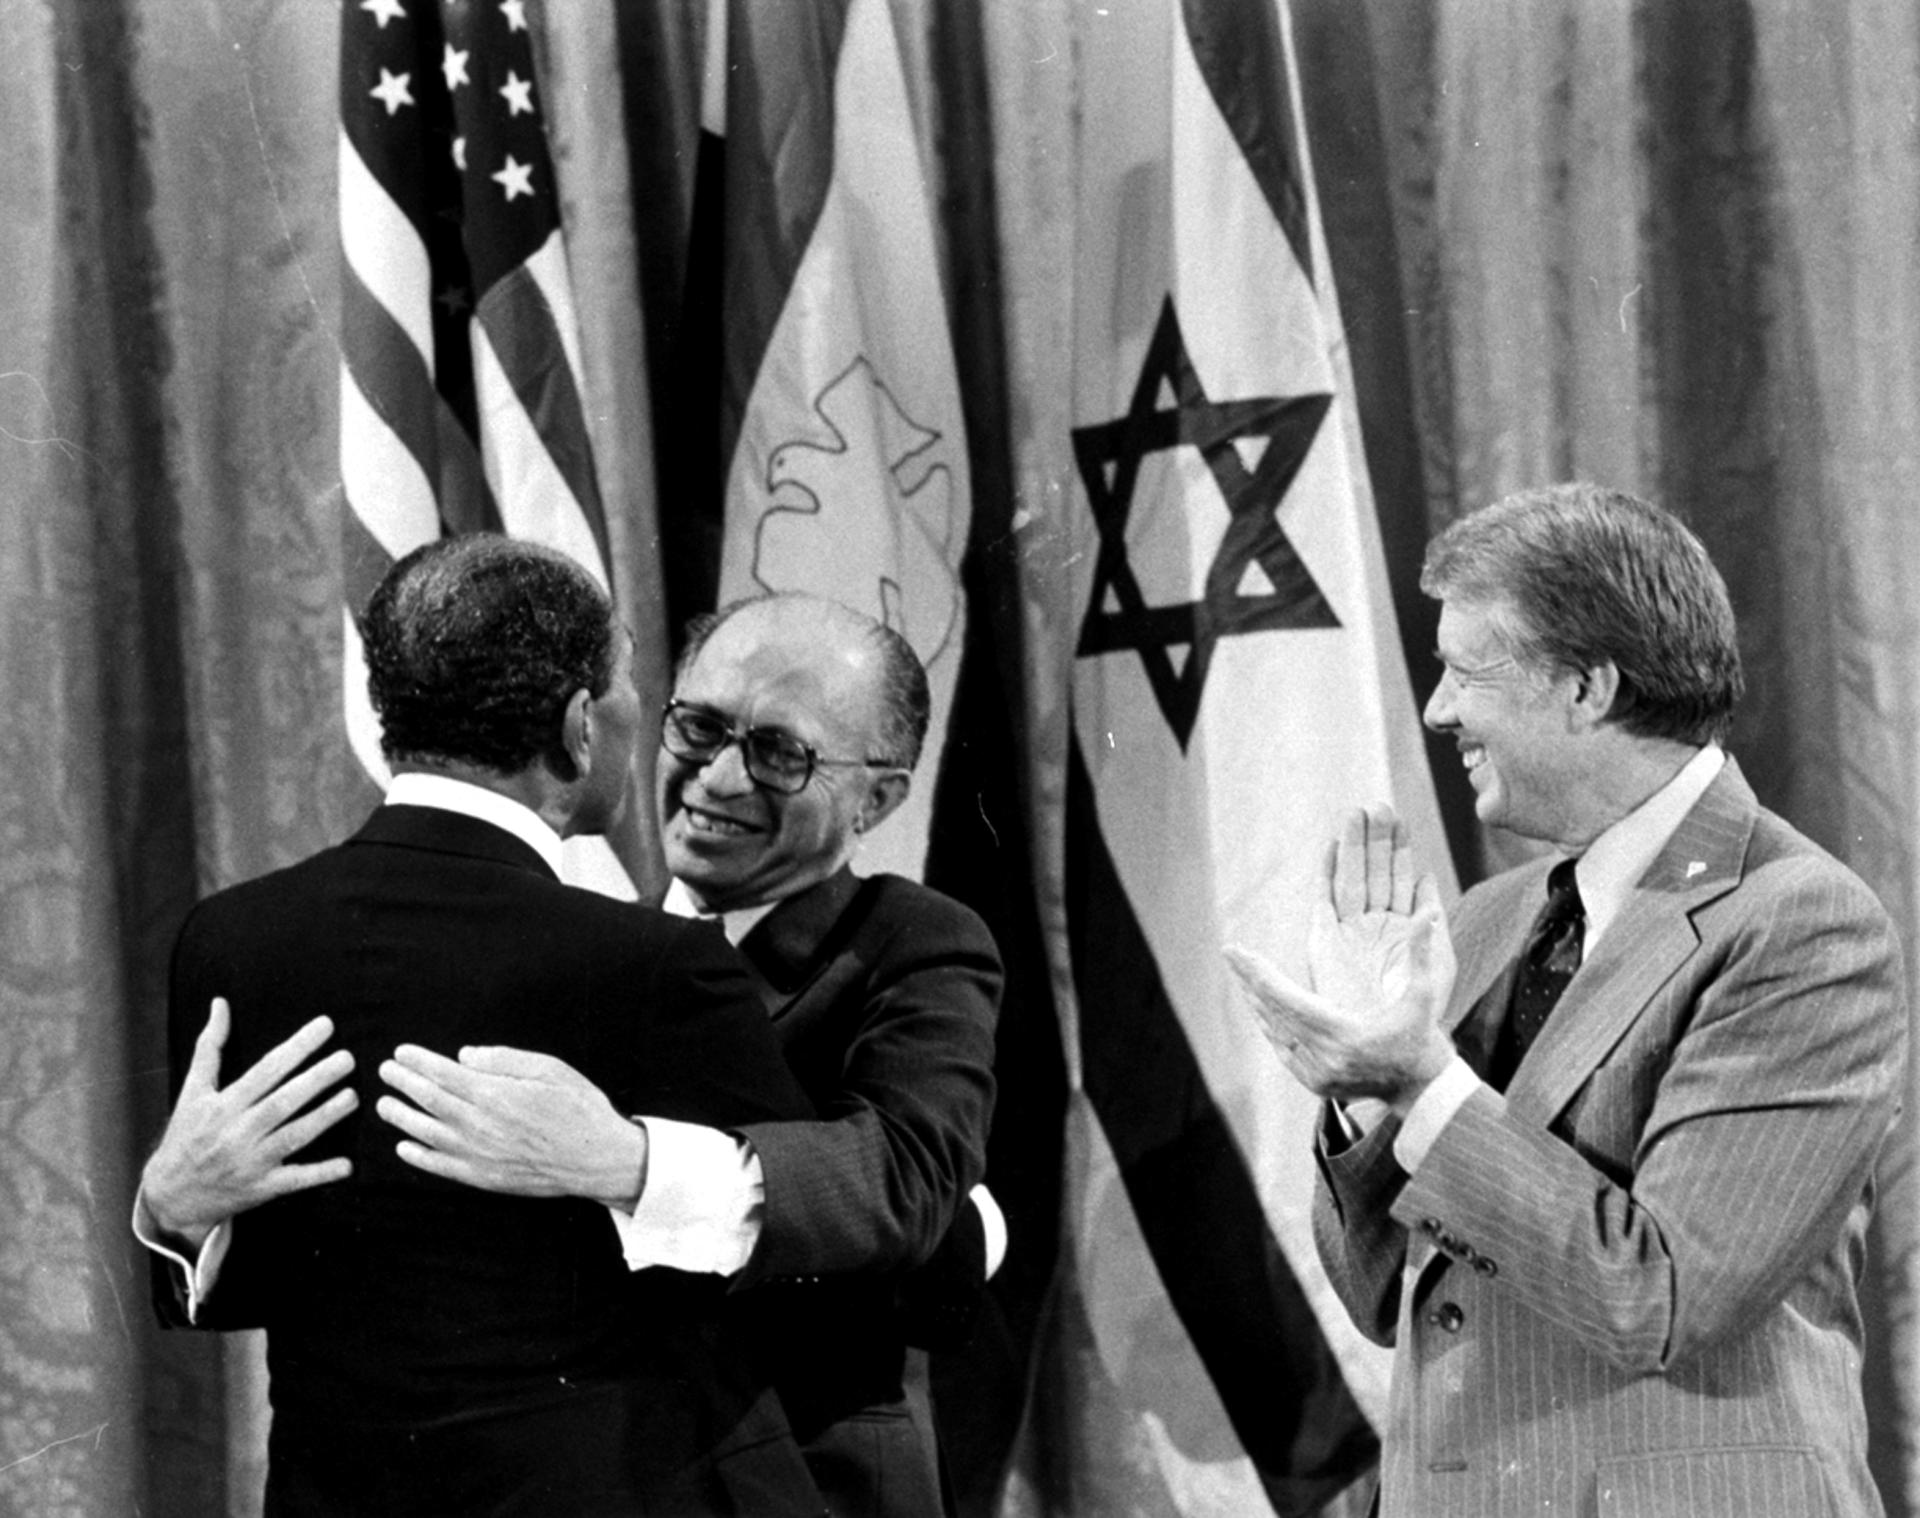 Egyptian President Anwar Sadat, left, and Israeli Prime Minister Menachem Begin, embrace as US President Jimmy Carter looks on after a peace deal at Camp David, Sept. 18, 1978.